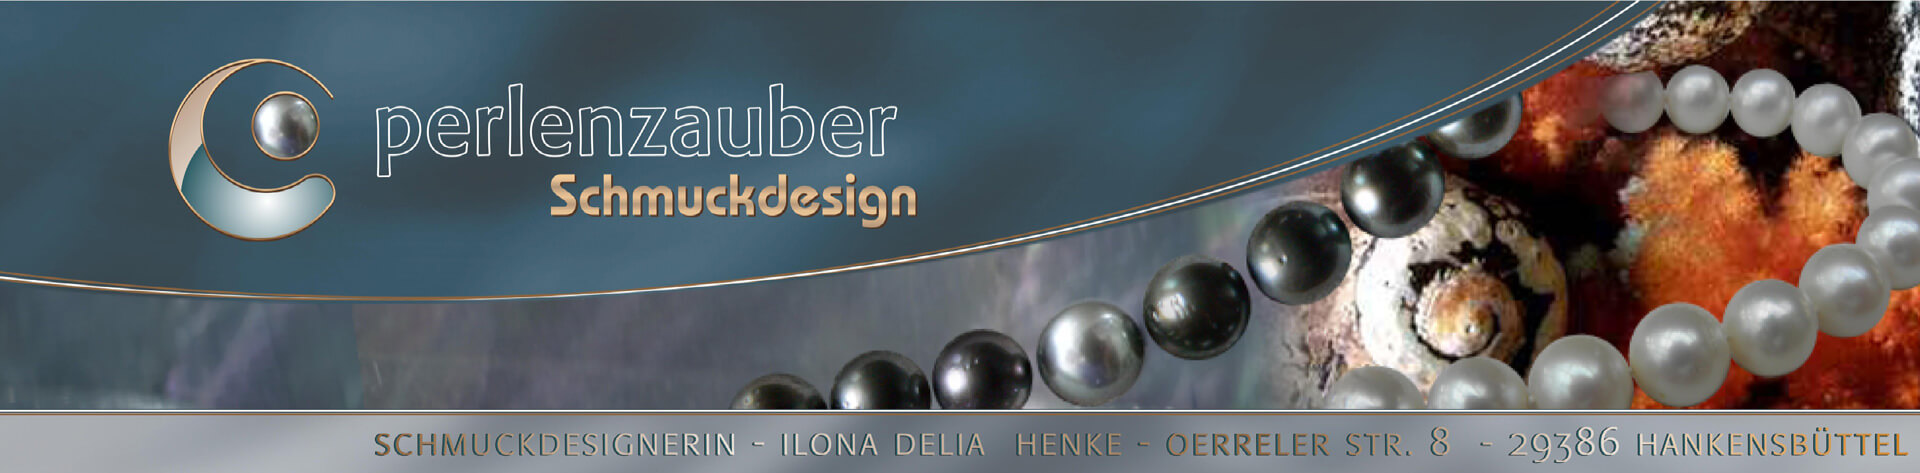 Banner Perlenzauber Schmuckdesign